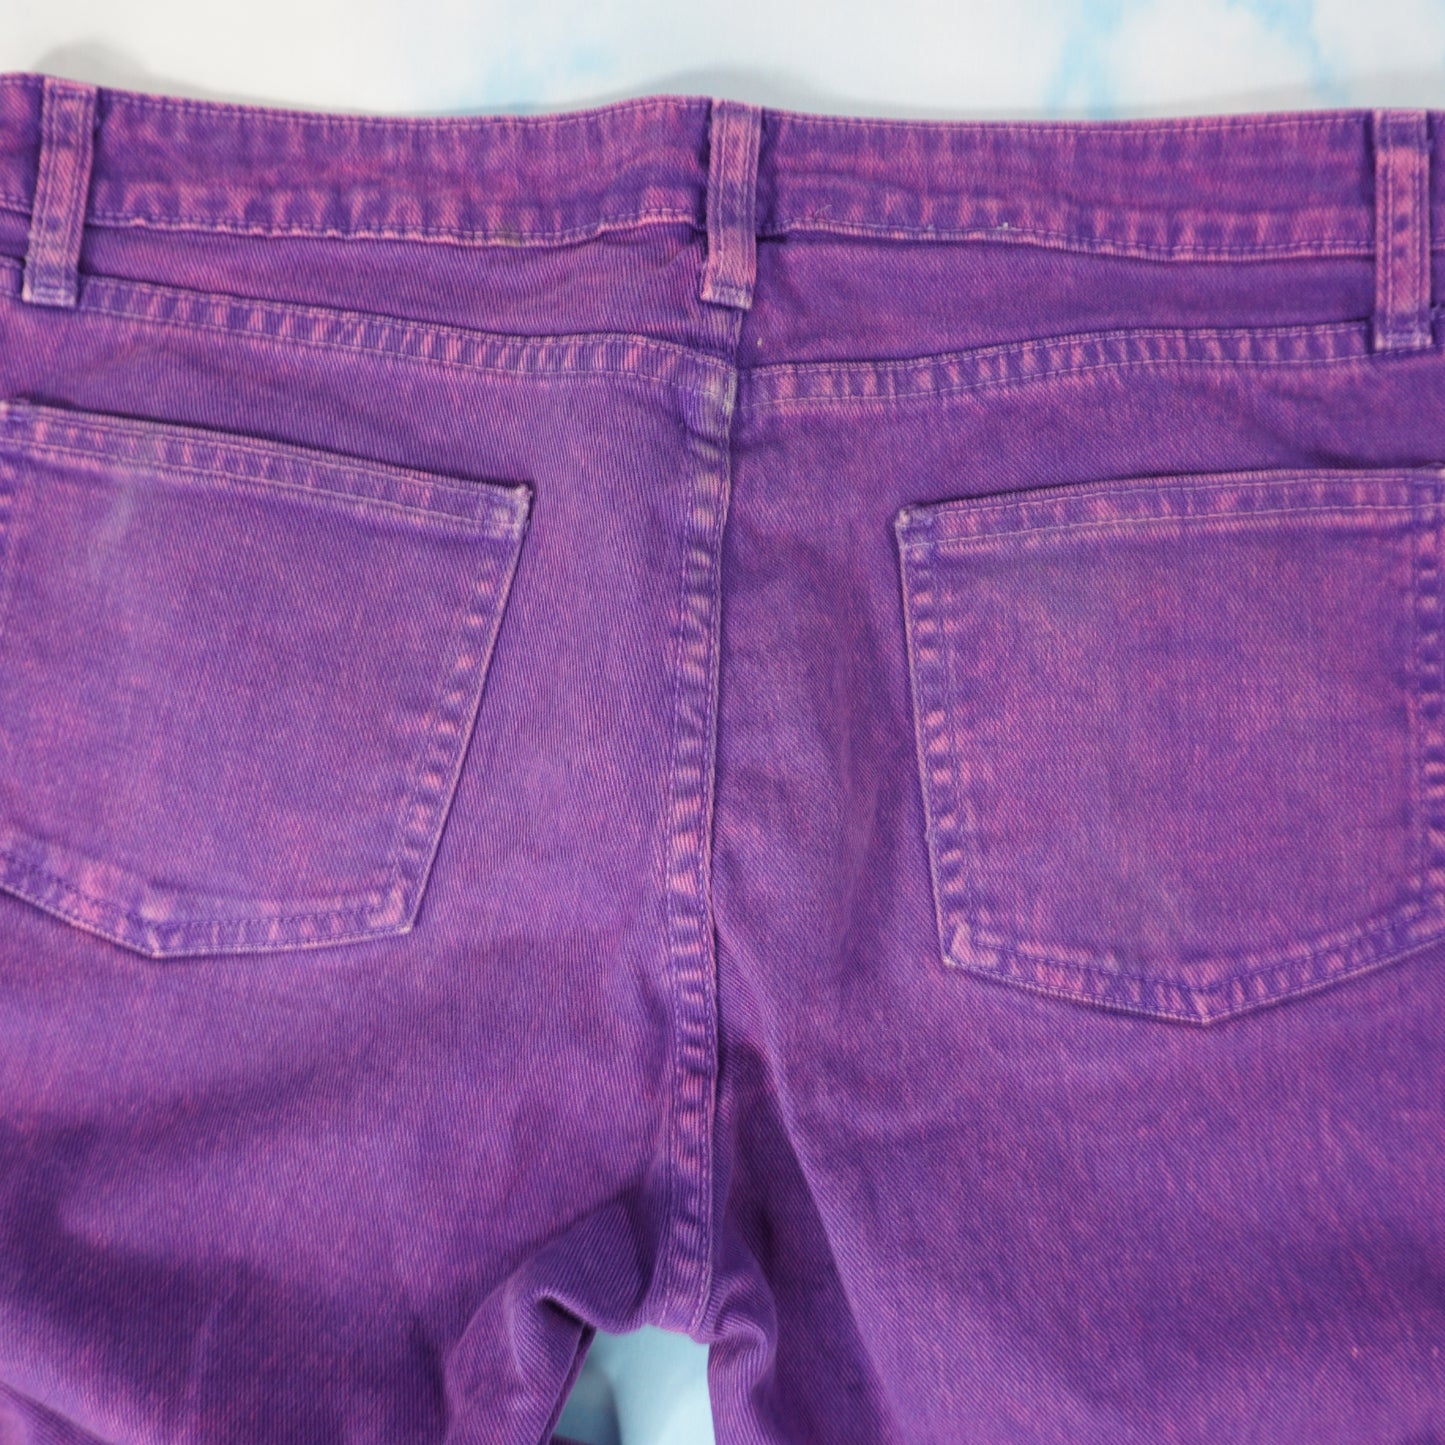 American Apparel Purple Jeans